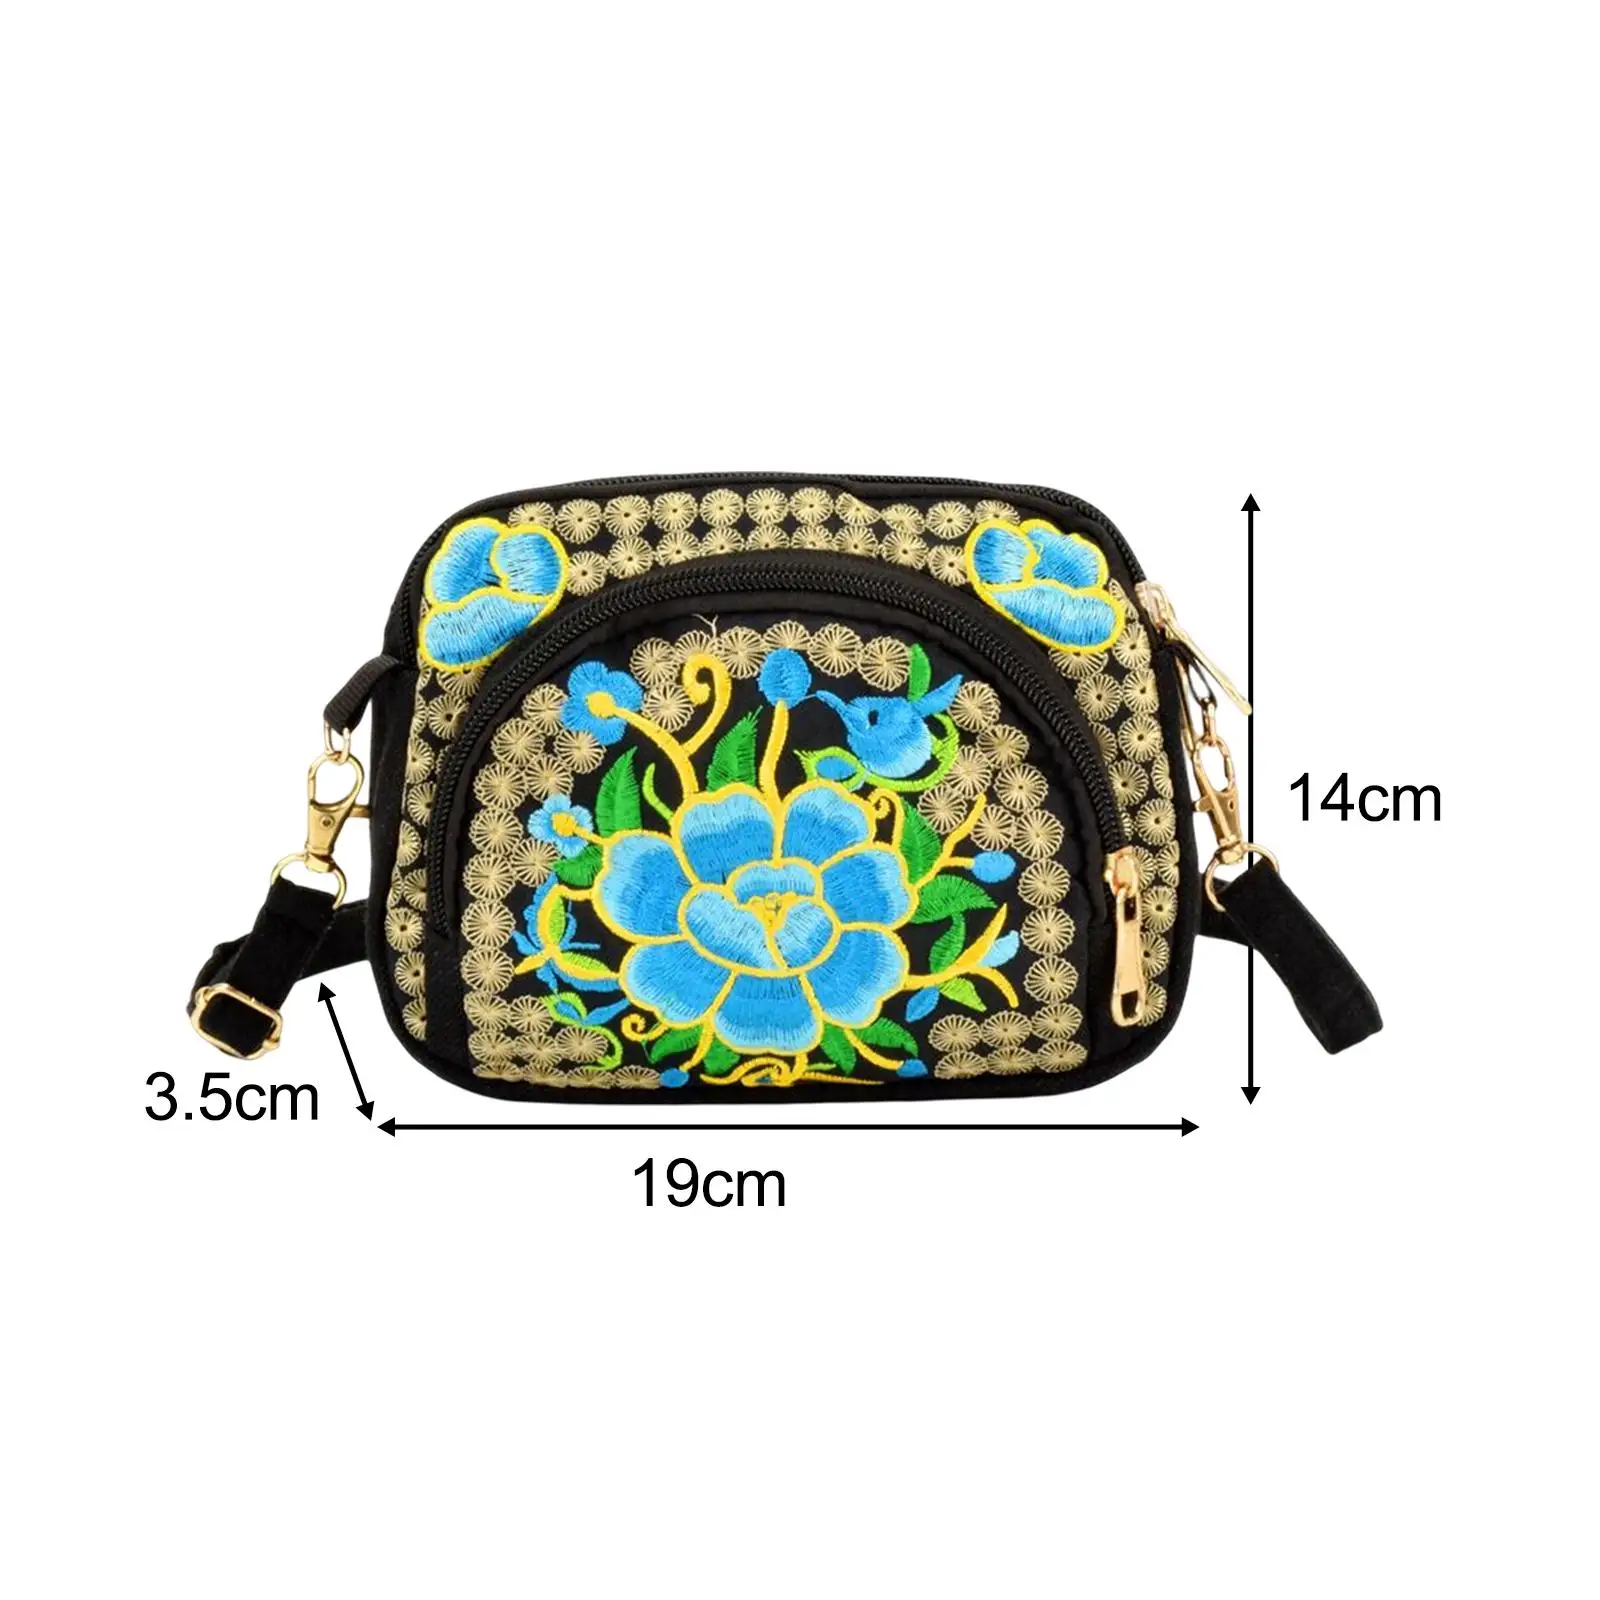 Ethnic Shoulder Bag Handmade Embroidery Crossbody Bag for Dating Travel Home